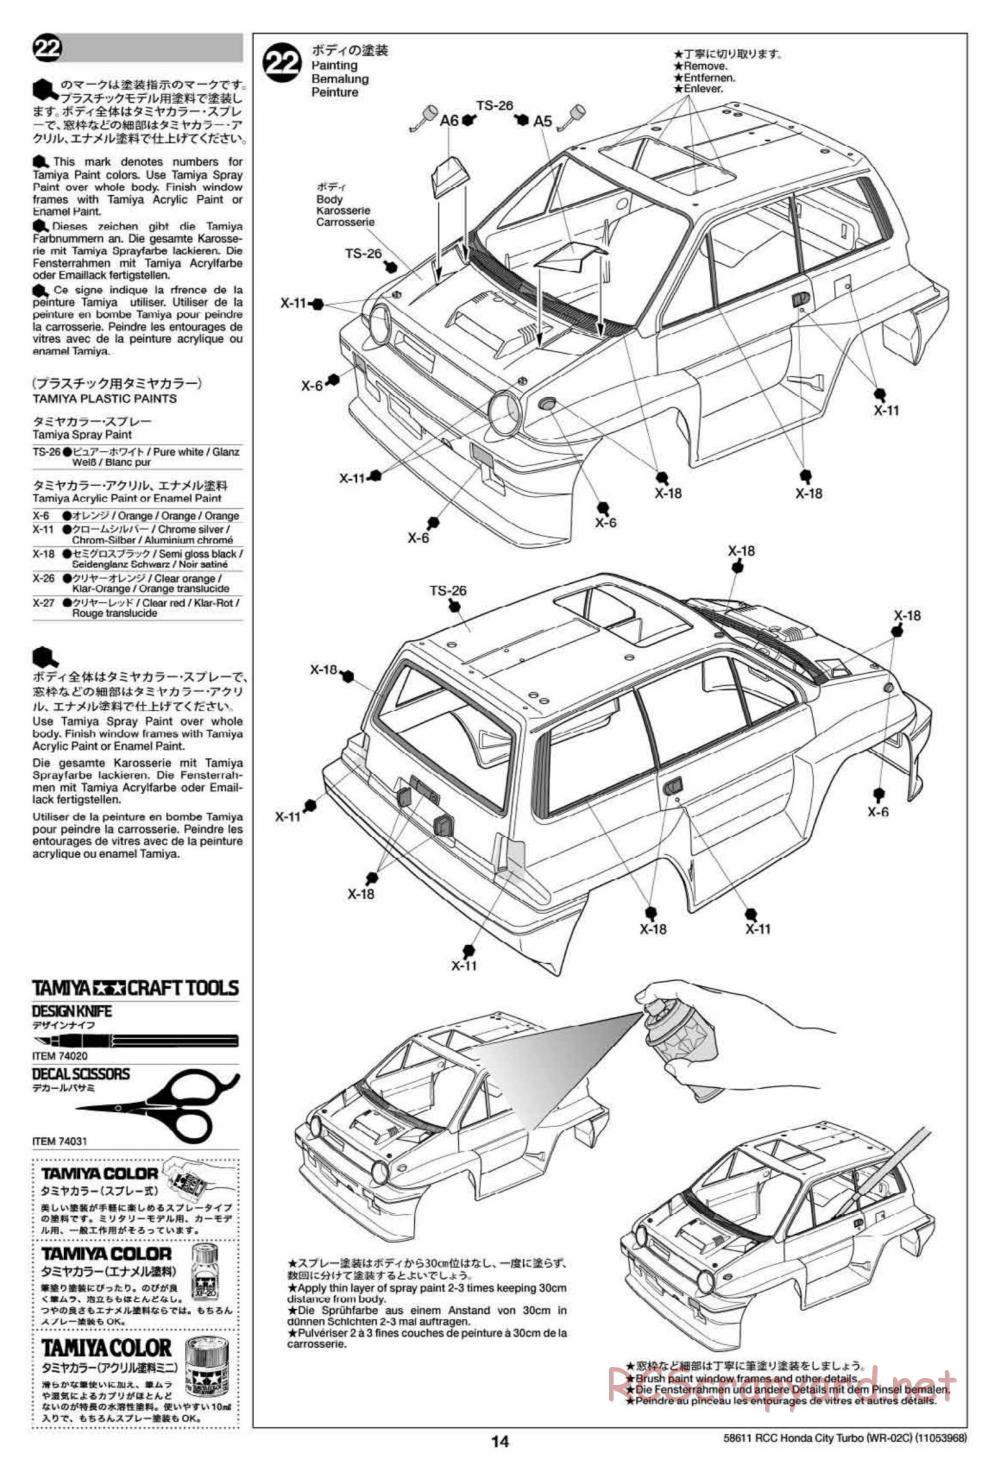 Tamiya - WR-02C Chassis - Manual - Page 14